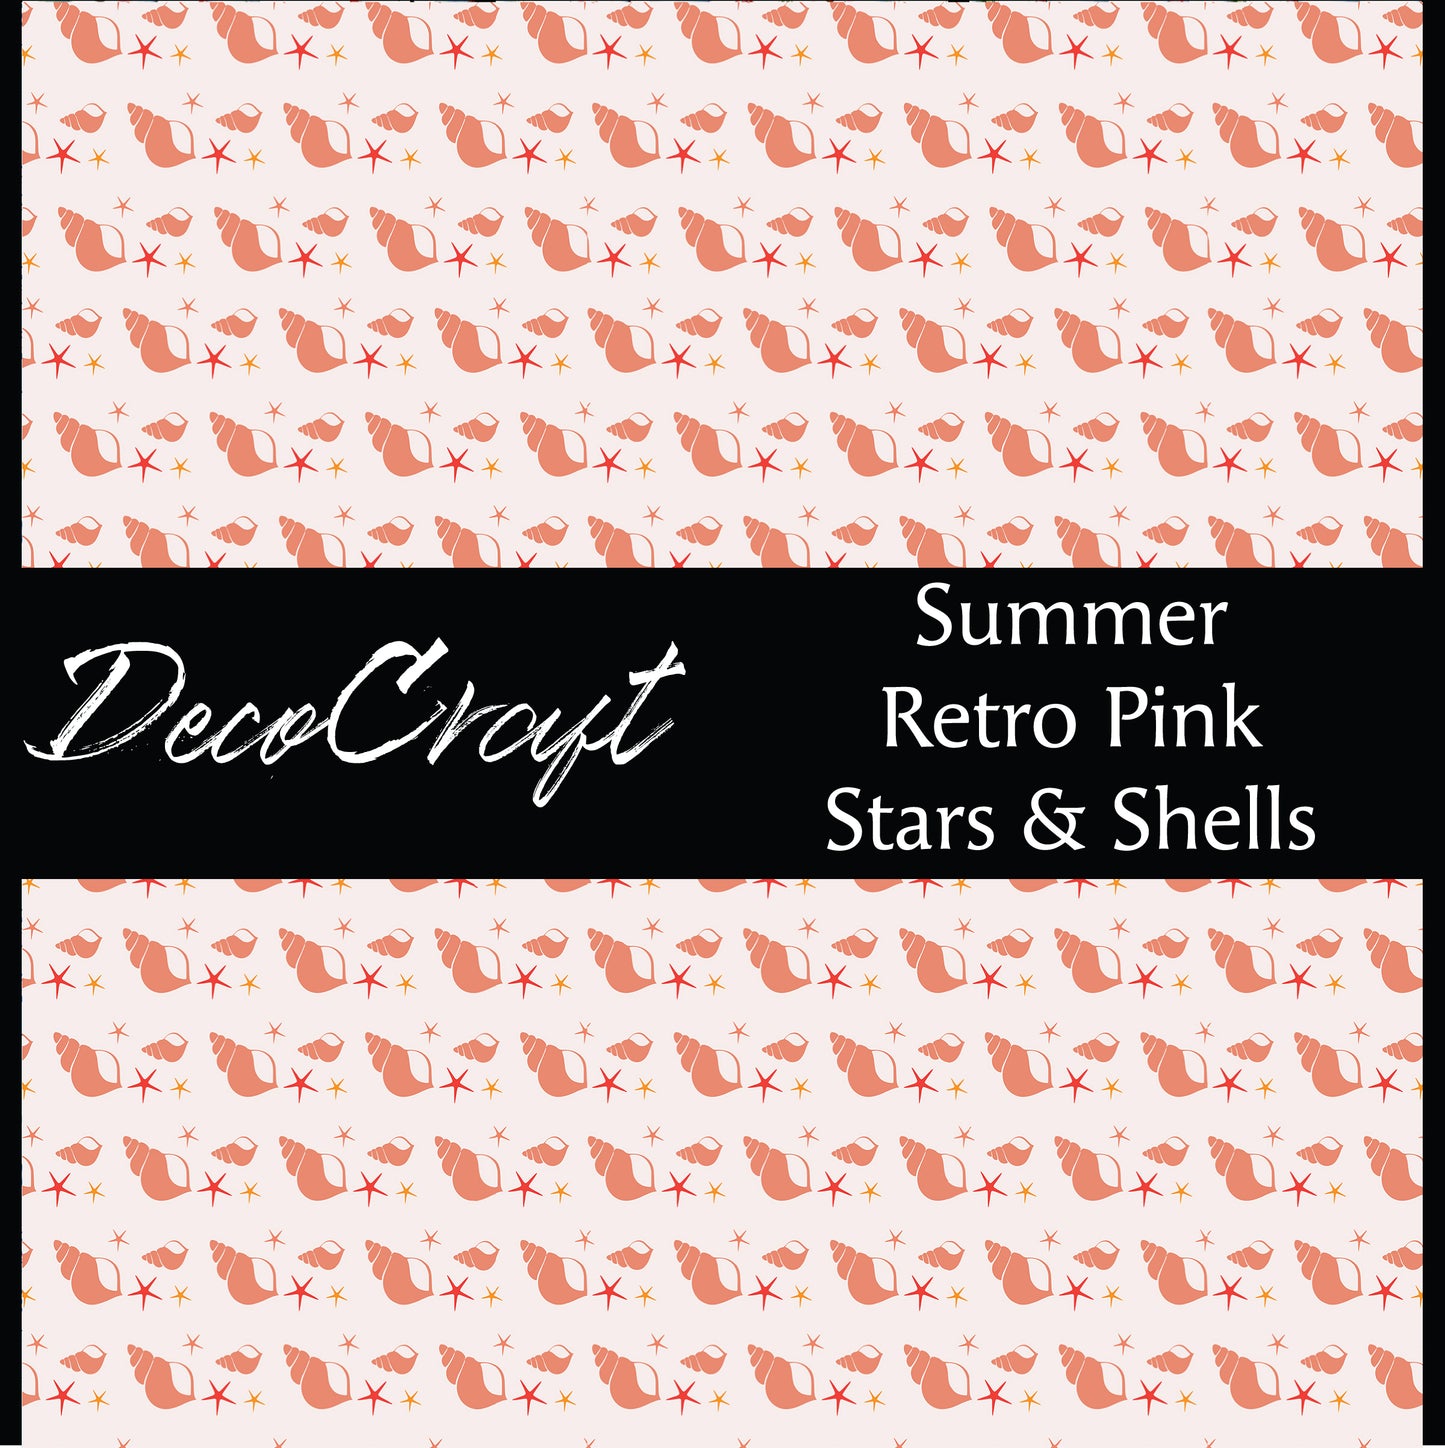 DecoCraft - Summer - Retro Pink Stars & Shells